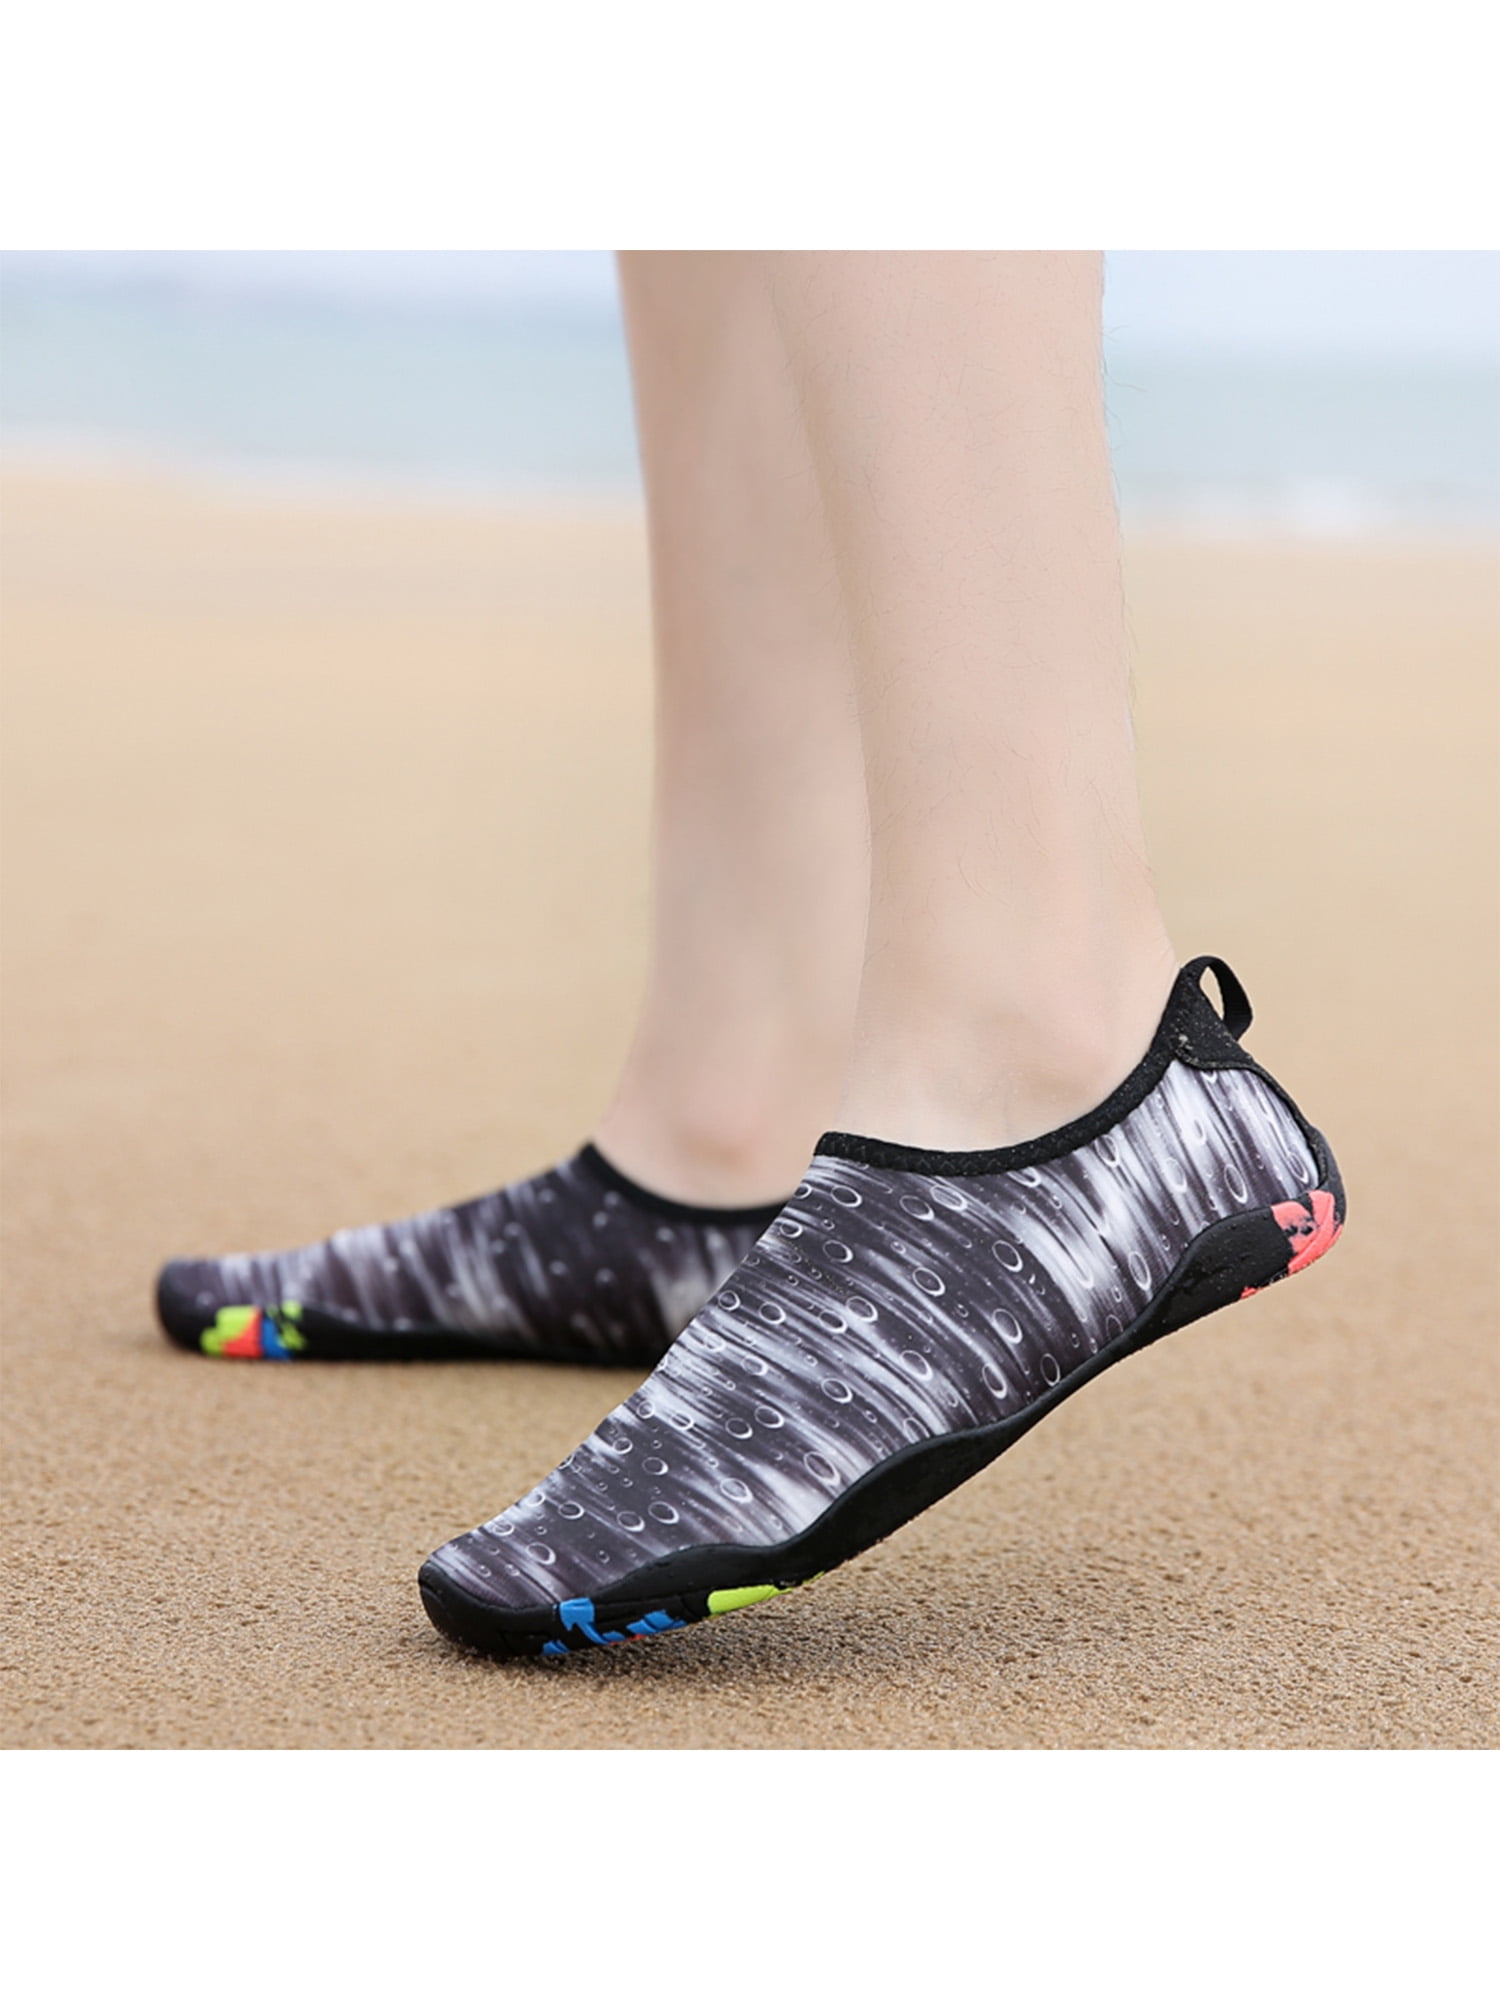 Men's Women's Surf Shoes Aqua Water Socks for Dive Swim Beach Soccer Volleyball 